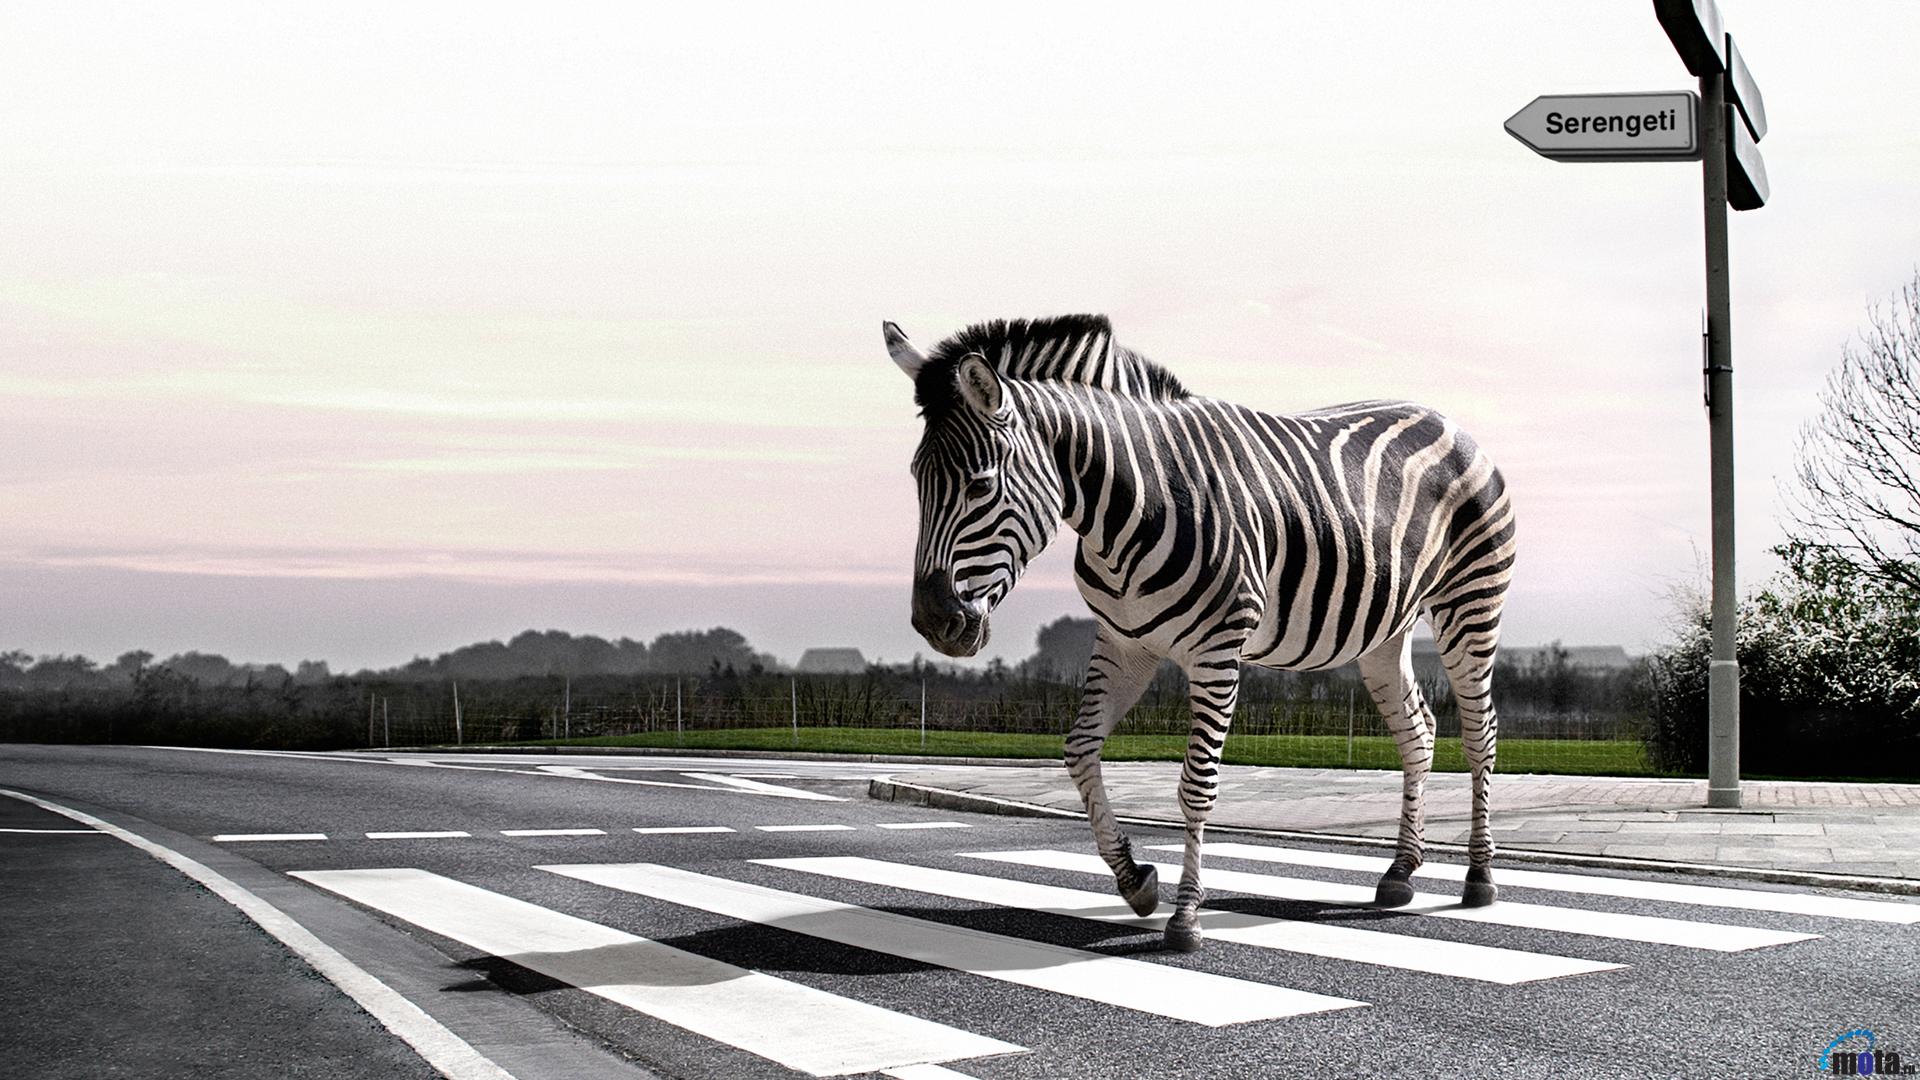 Download Wallpaper Zebra crossing pedestrian crossing (1920 x 1080 ...